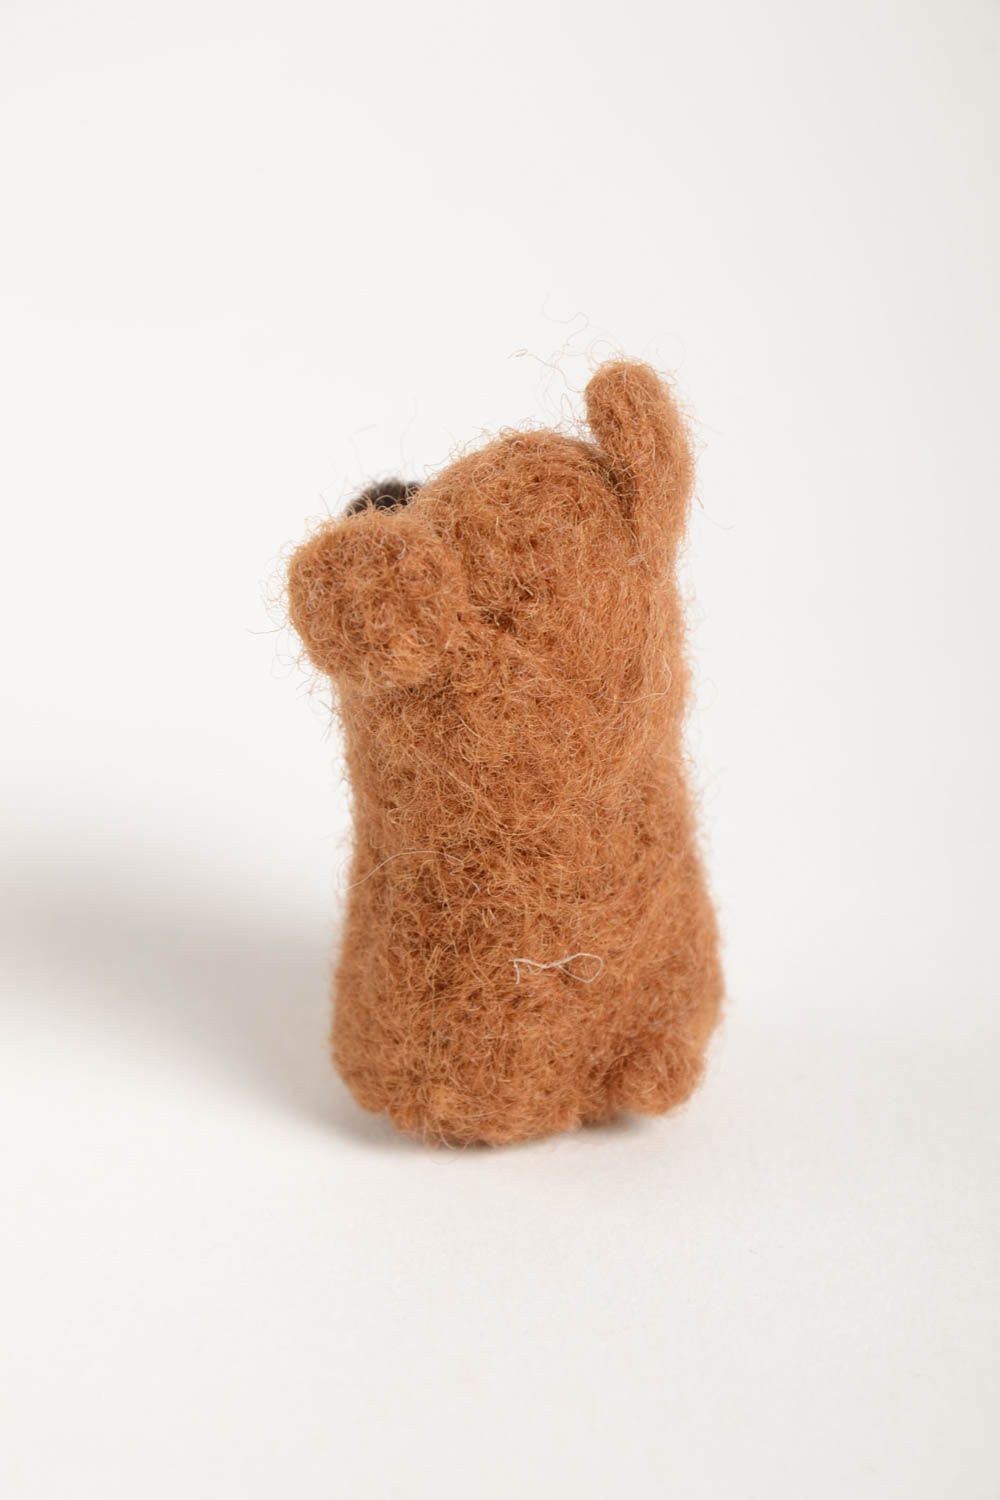 Handmade felted wool toy soft toy for kids needle felting interior decorating photo 3